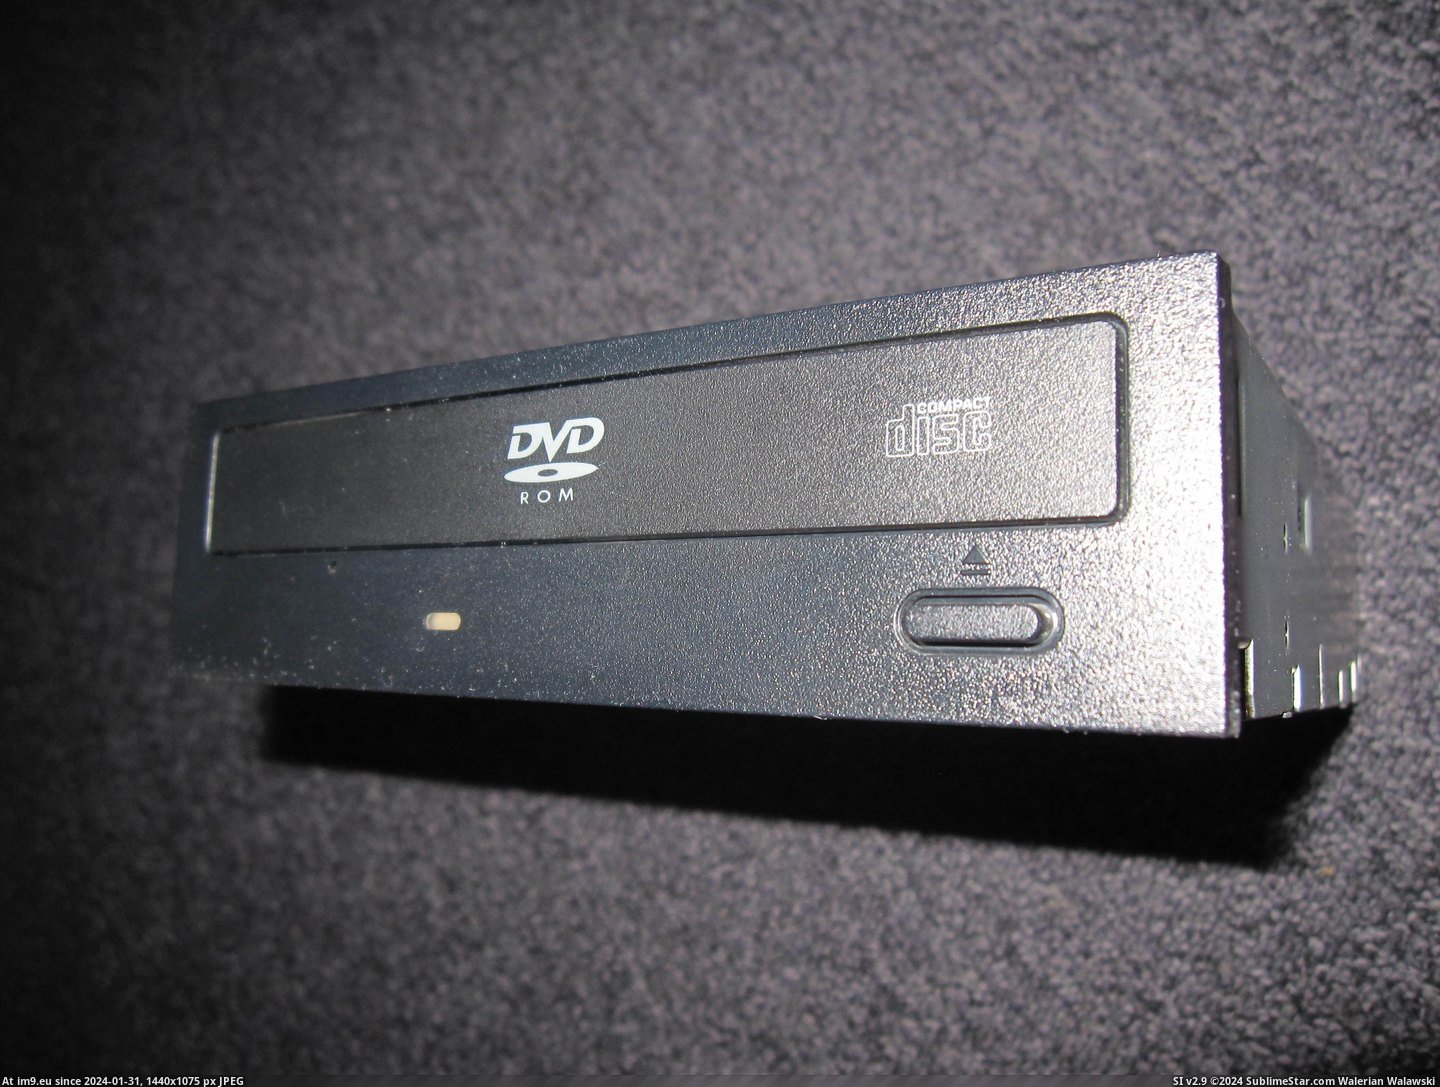 #Rom #Liteon #Sohd #Dvd HP Liteon SOHD-167T DVD ROM IMG_1374 Pic. (Obraz z album DVD-ROM))